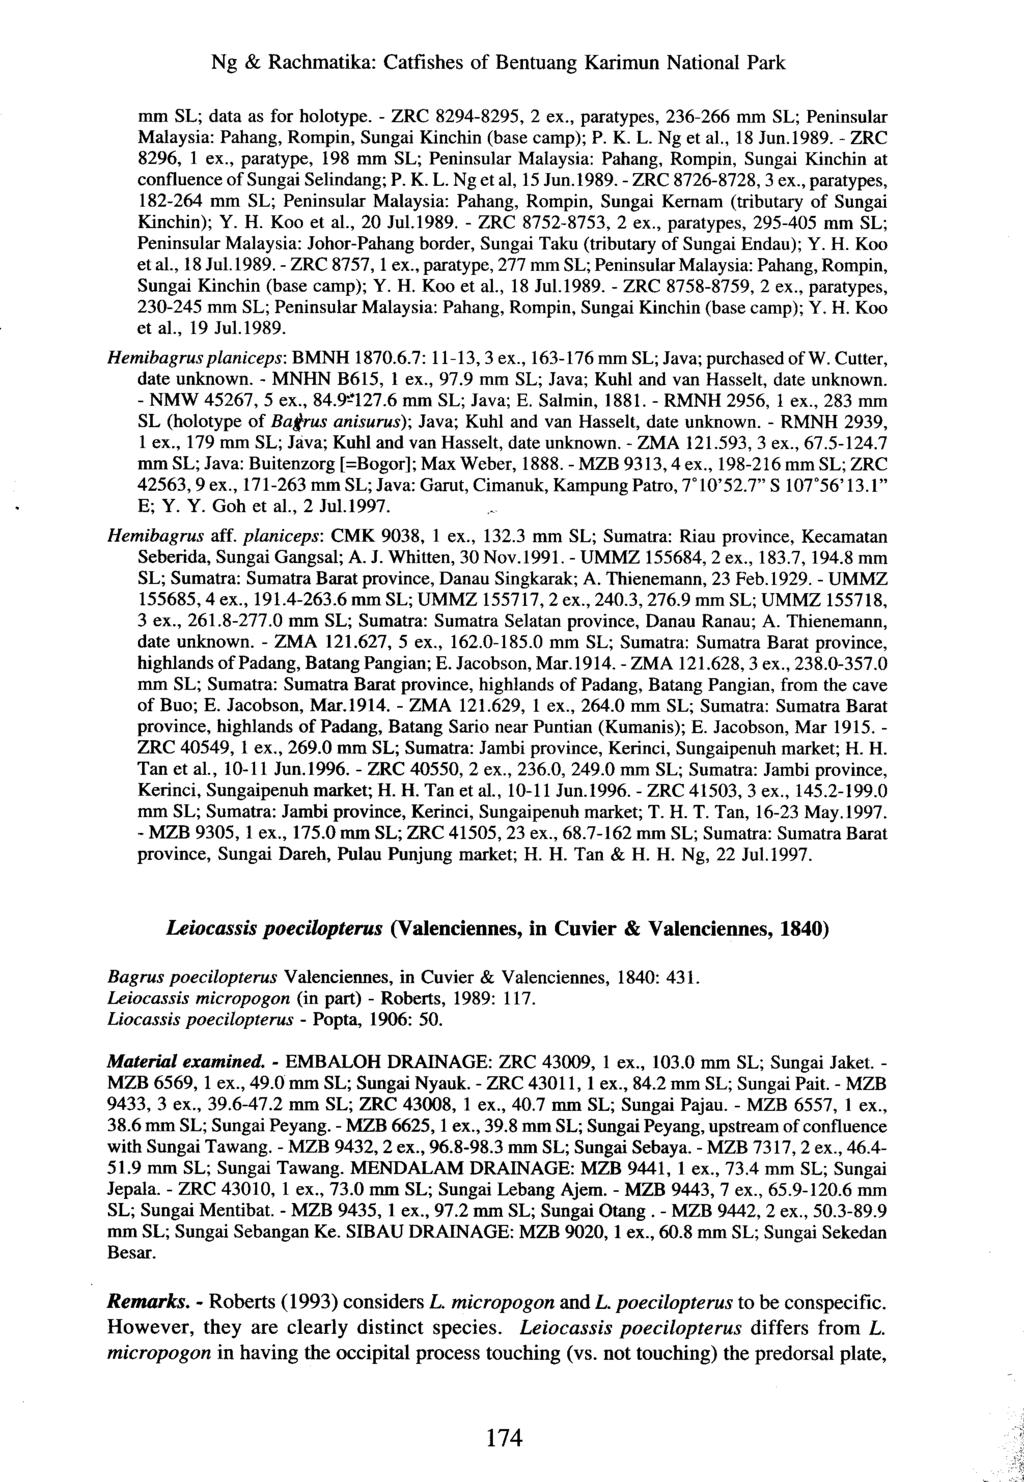 mm SL; data as for holotype. - ZRC 8294-8295, 2 ex., paratypes, 236-266 mm SL; Peninsular Malaysia: Pahang, Rompin, Sungai Kinchin (base camp); P. K. L. Ng et ai., 18 Jun.1989. - ZRC 8296, 1 ex.